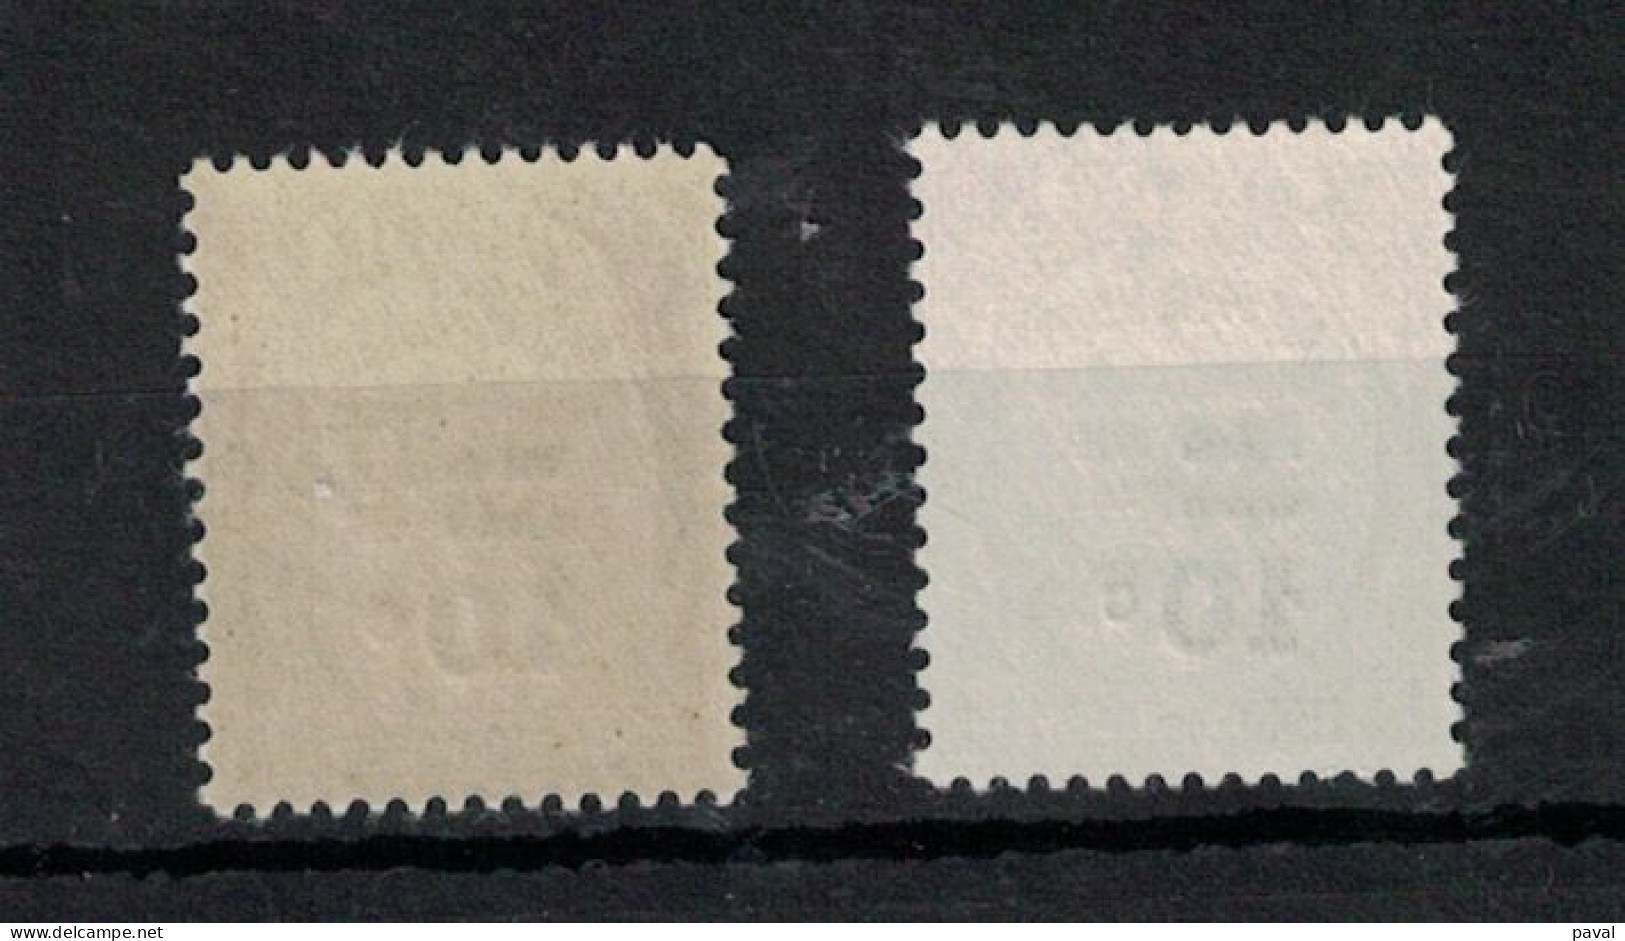 TAXE N°2 NEUF**MNH + N°2 (*) SG, COTE 16,50€, ALGERIE, 1926/32. - Portomarken